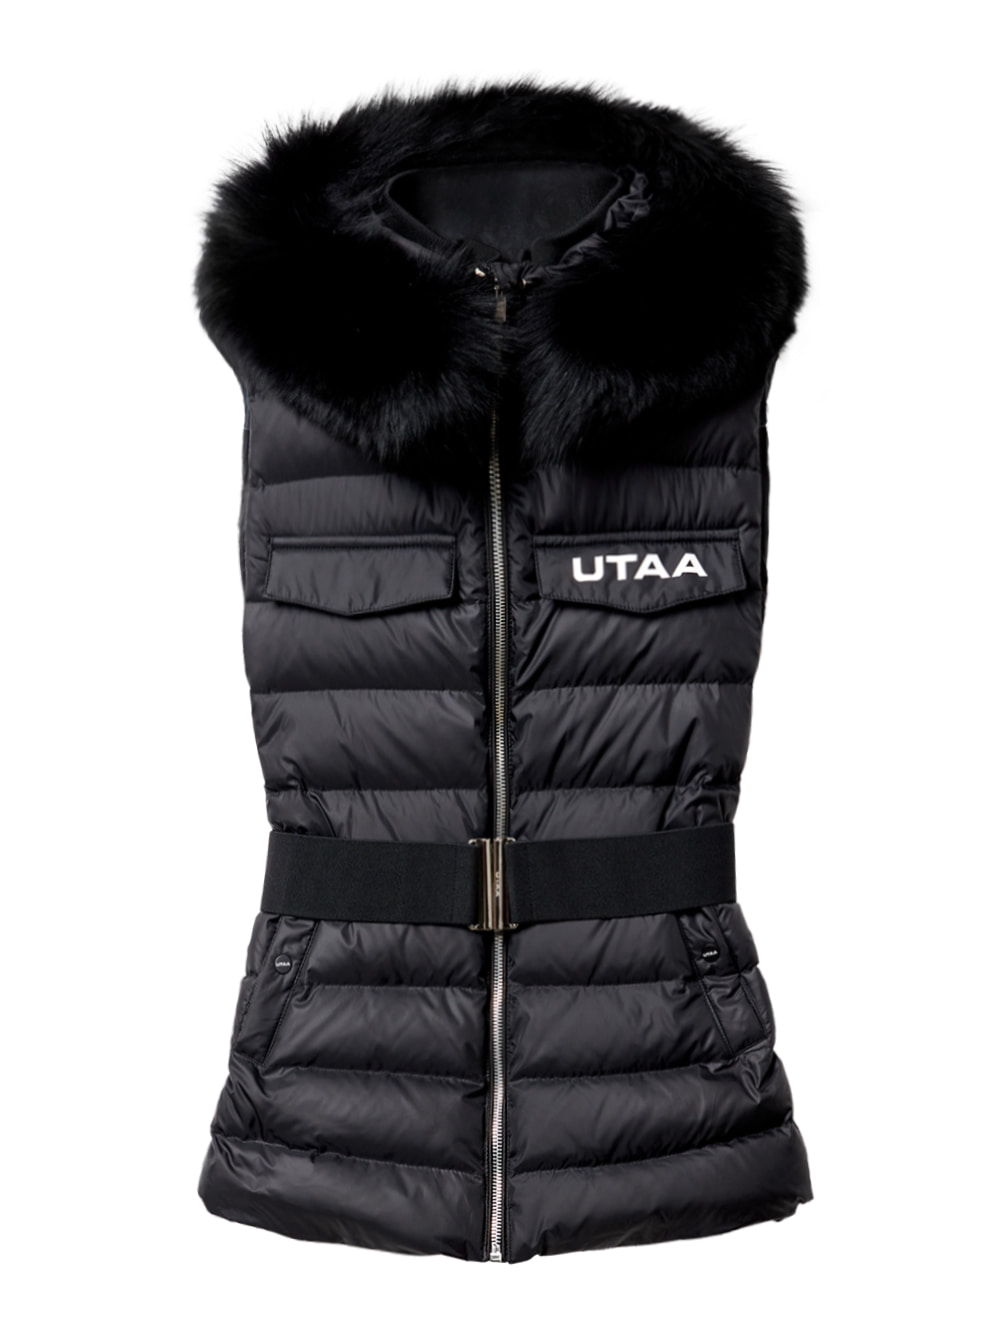 UTAA Alpine Fox Down Vest : Black (UB4DVF744BK)